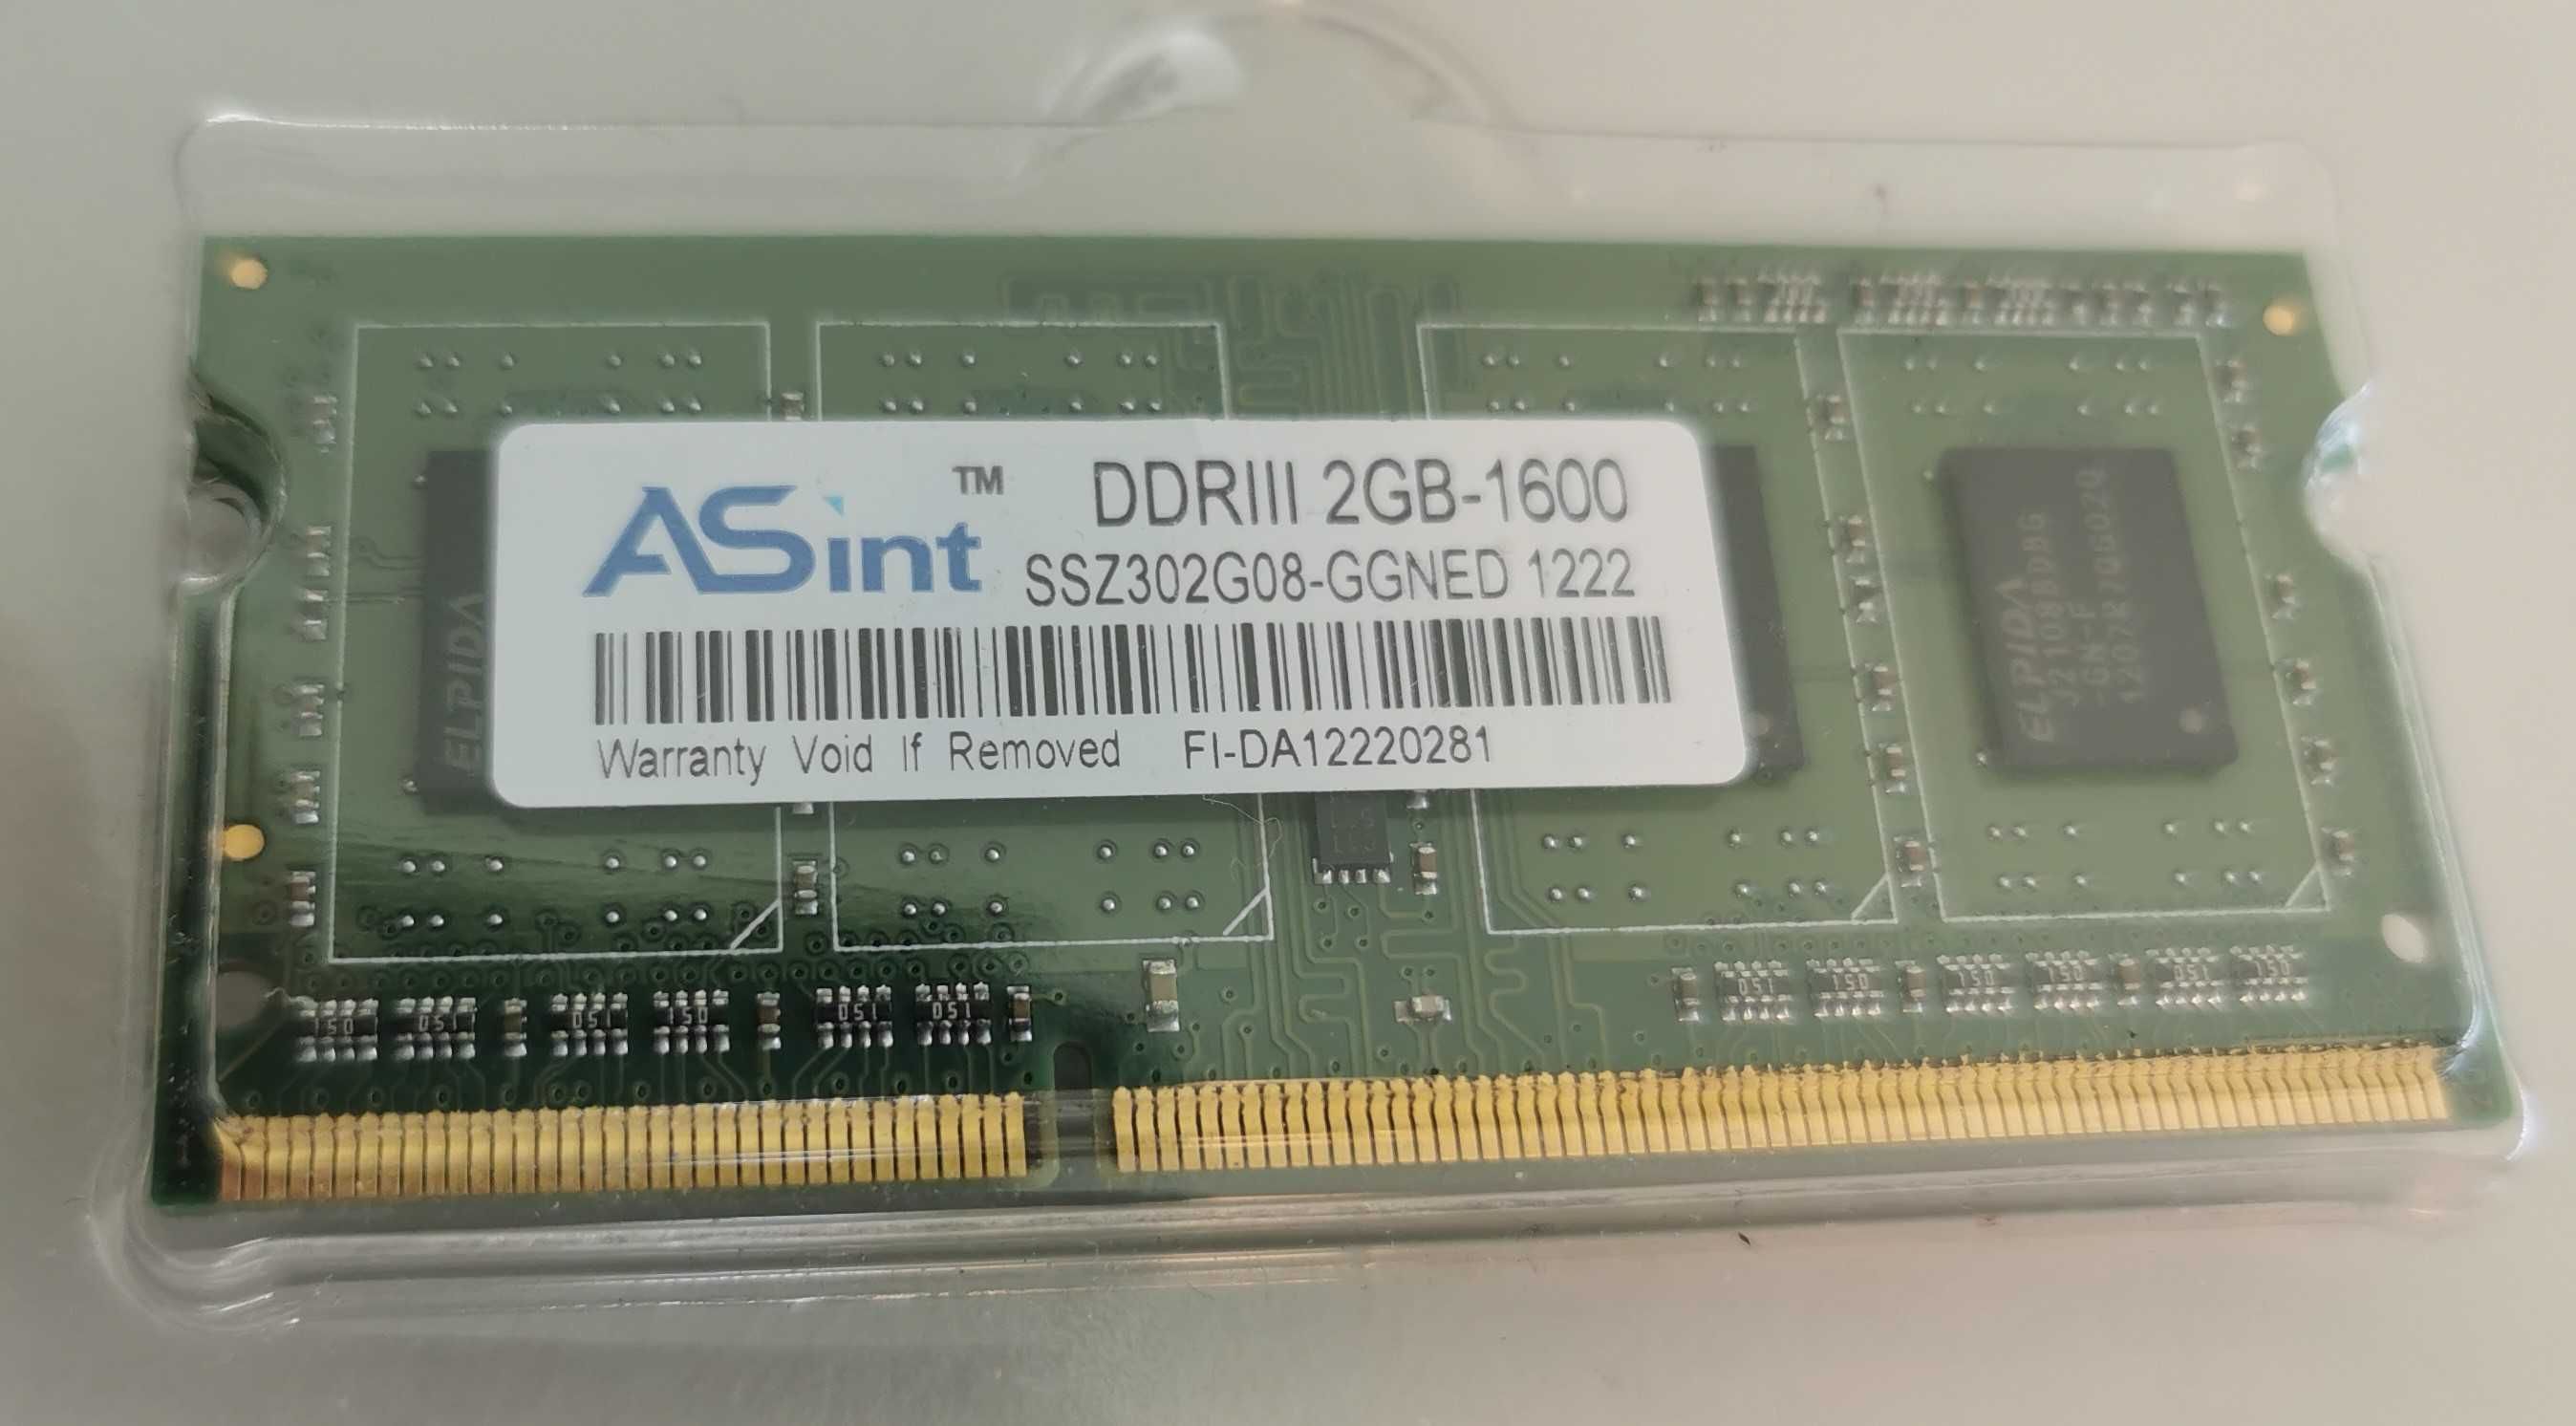 Asint DDR3 2GB-1600 SSZ302G08-GGNED 1222